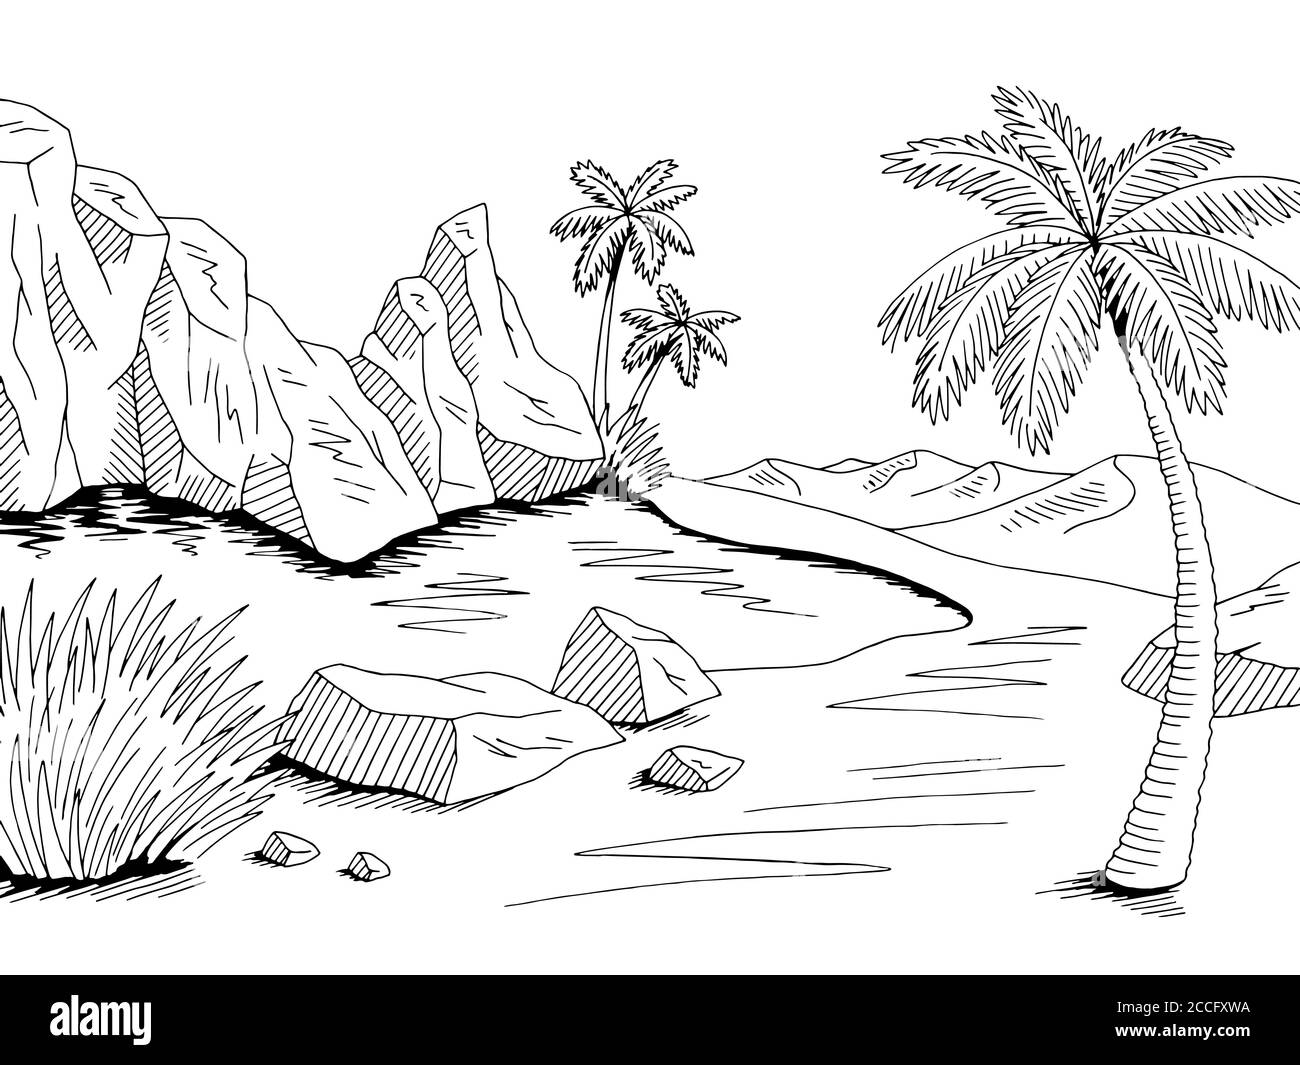 Oase Wüste Grafik schwarz weiß Landschaft Illustration Vektor Stock Vektor